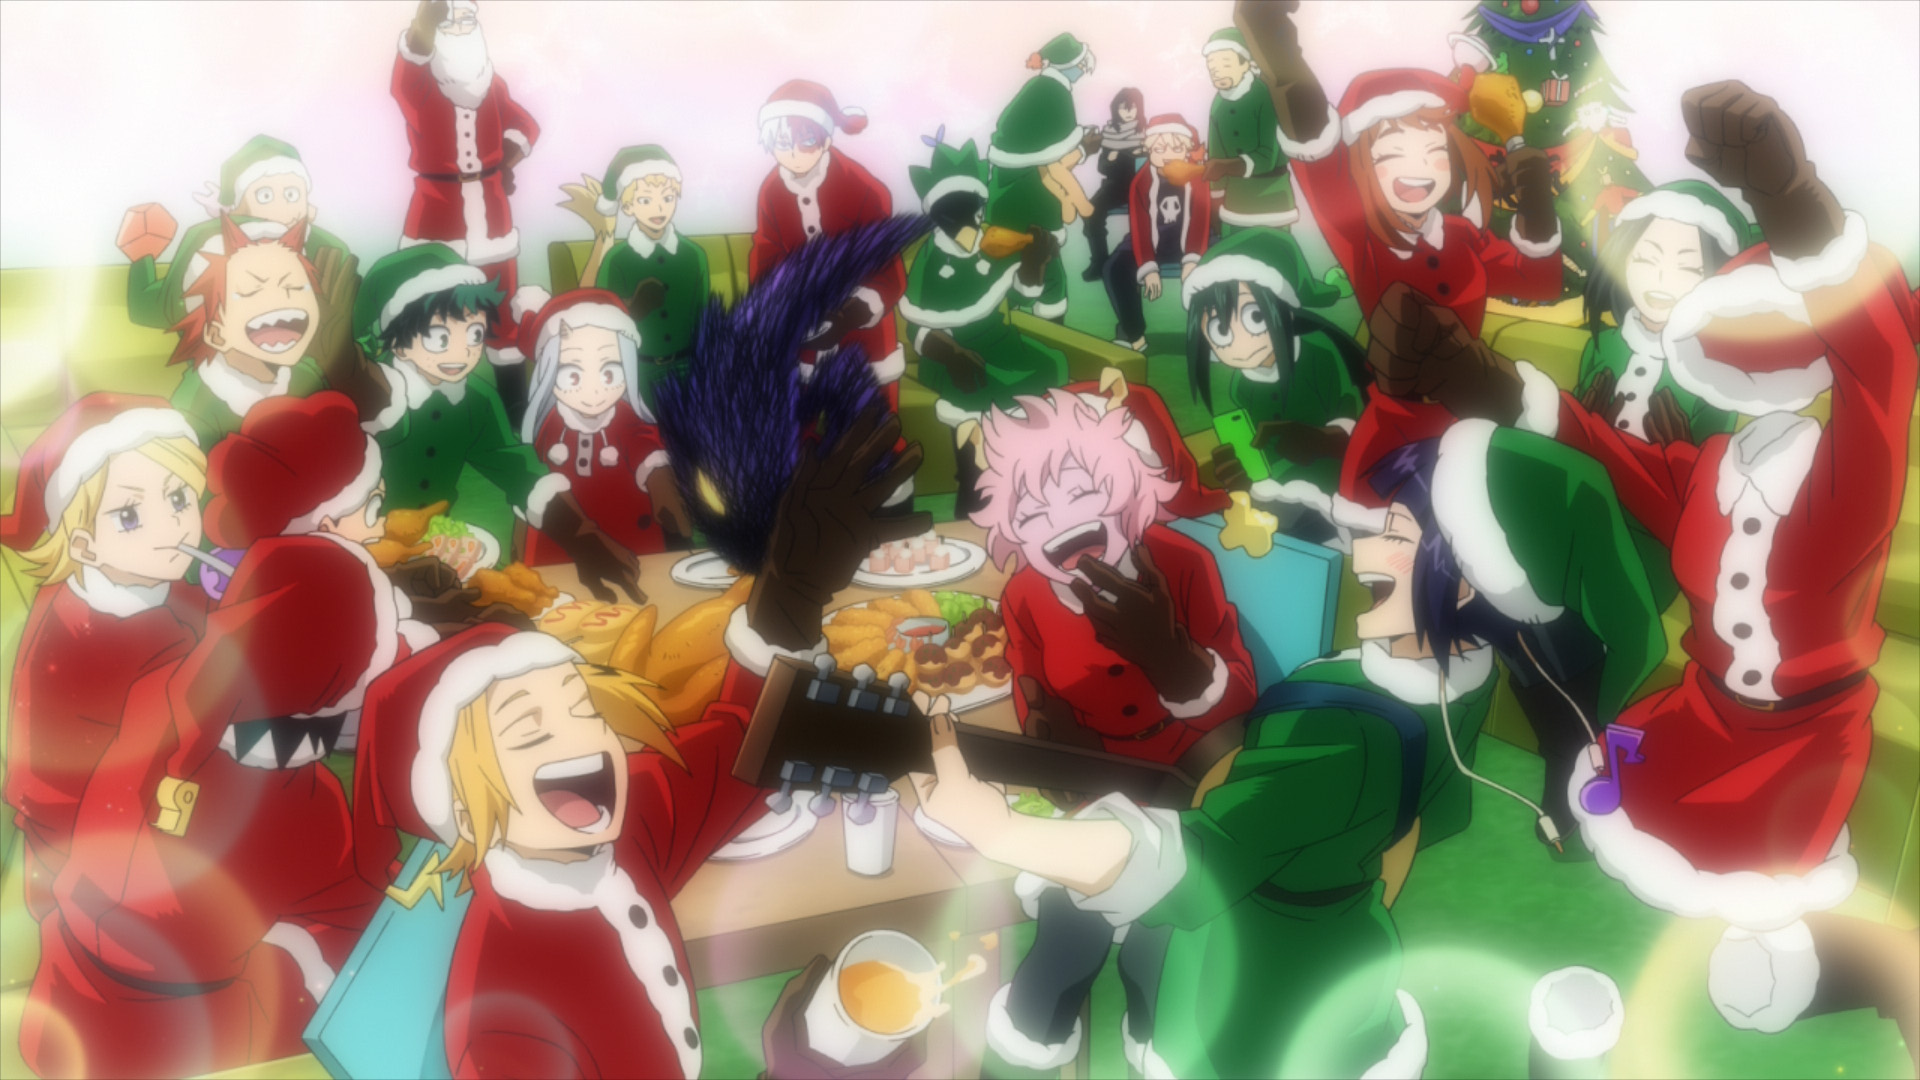 Keigo's Christmas stories on X: Saitama (Commision) Coloring done